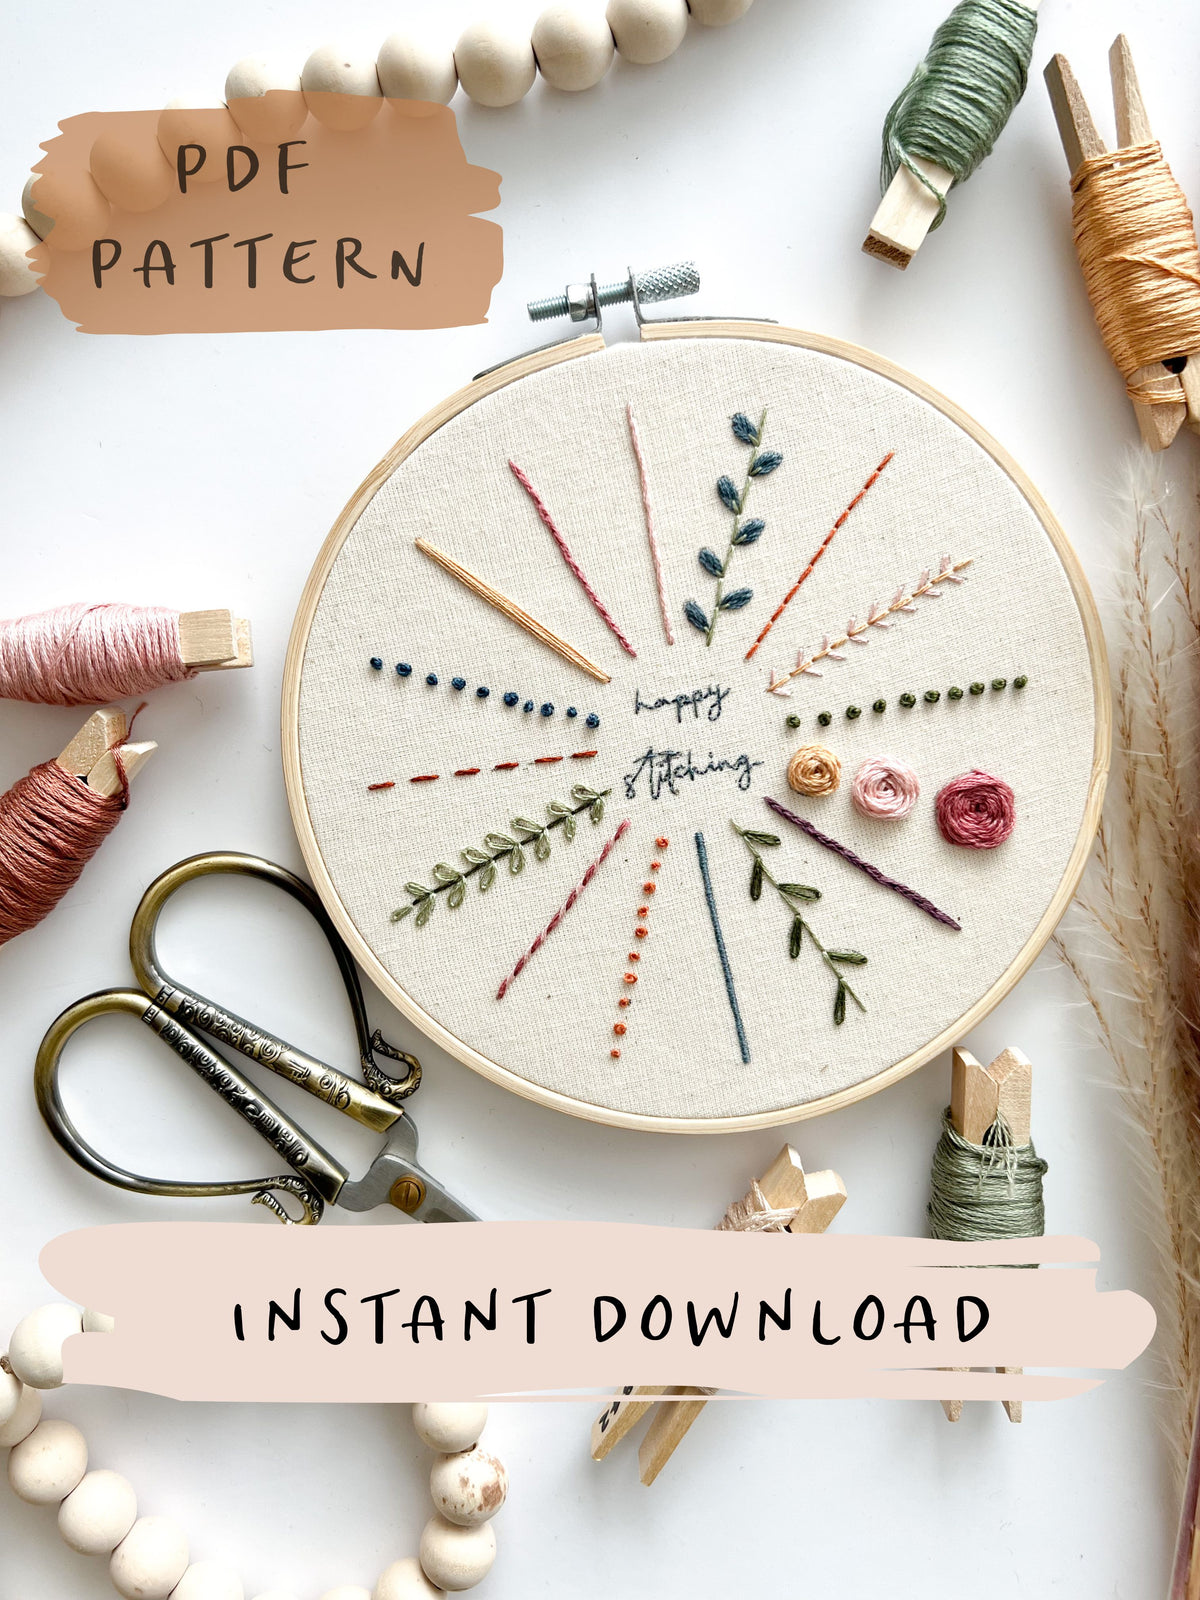 Embroidery Stitches Free PDF Book